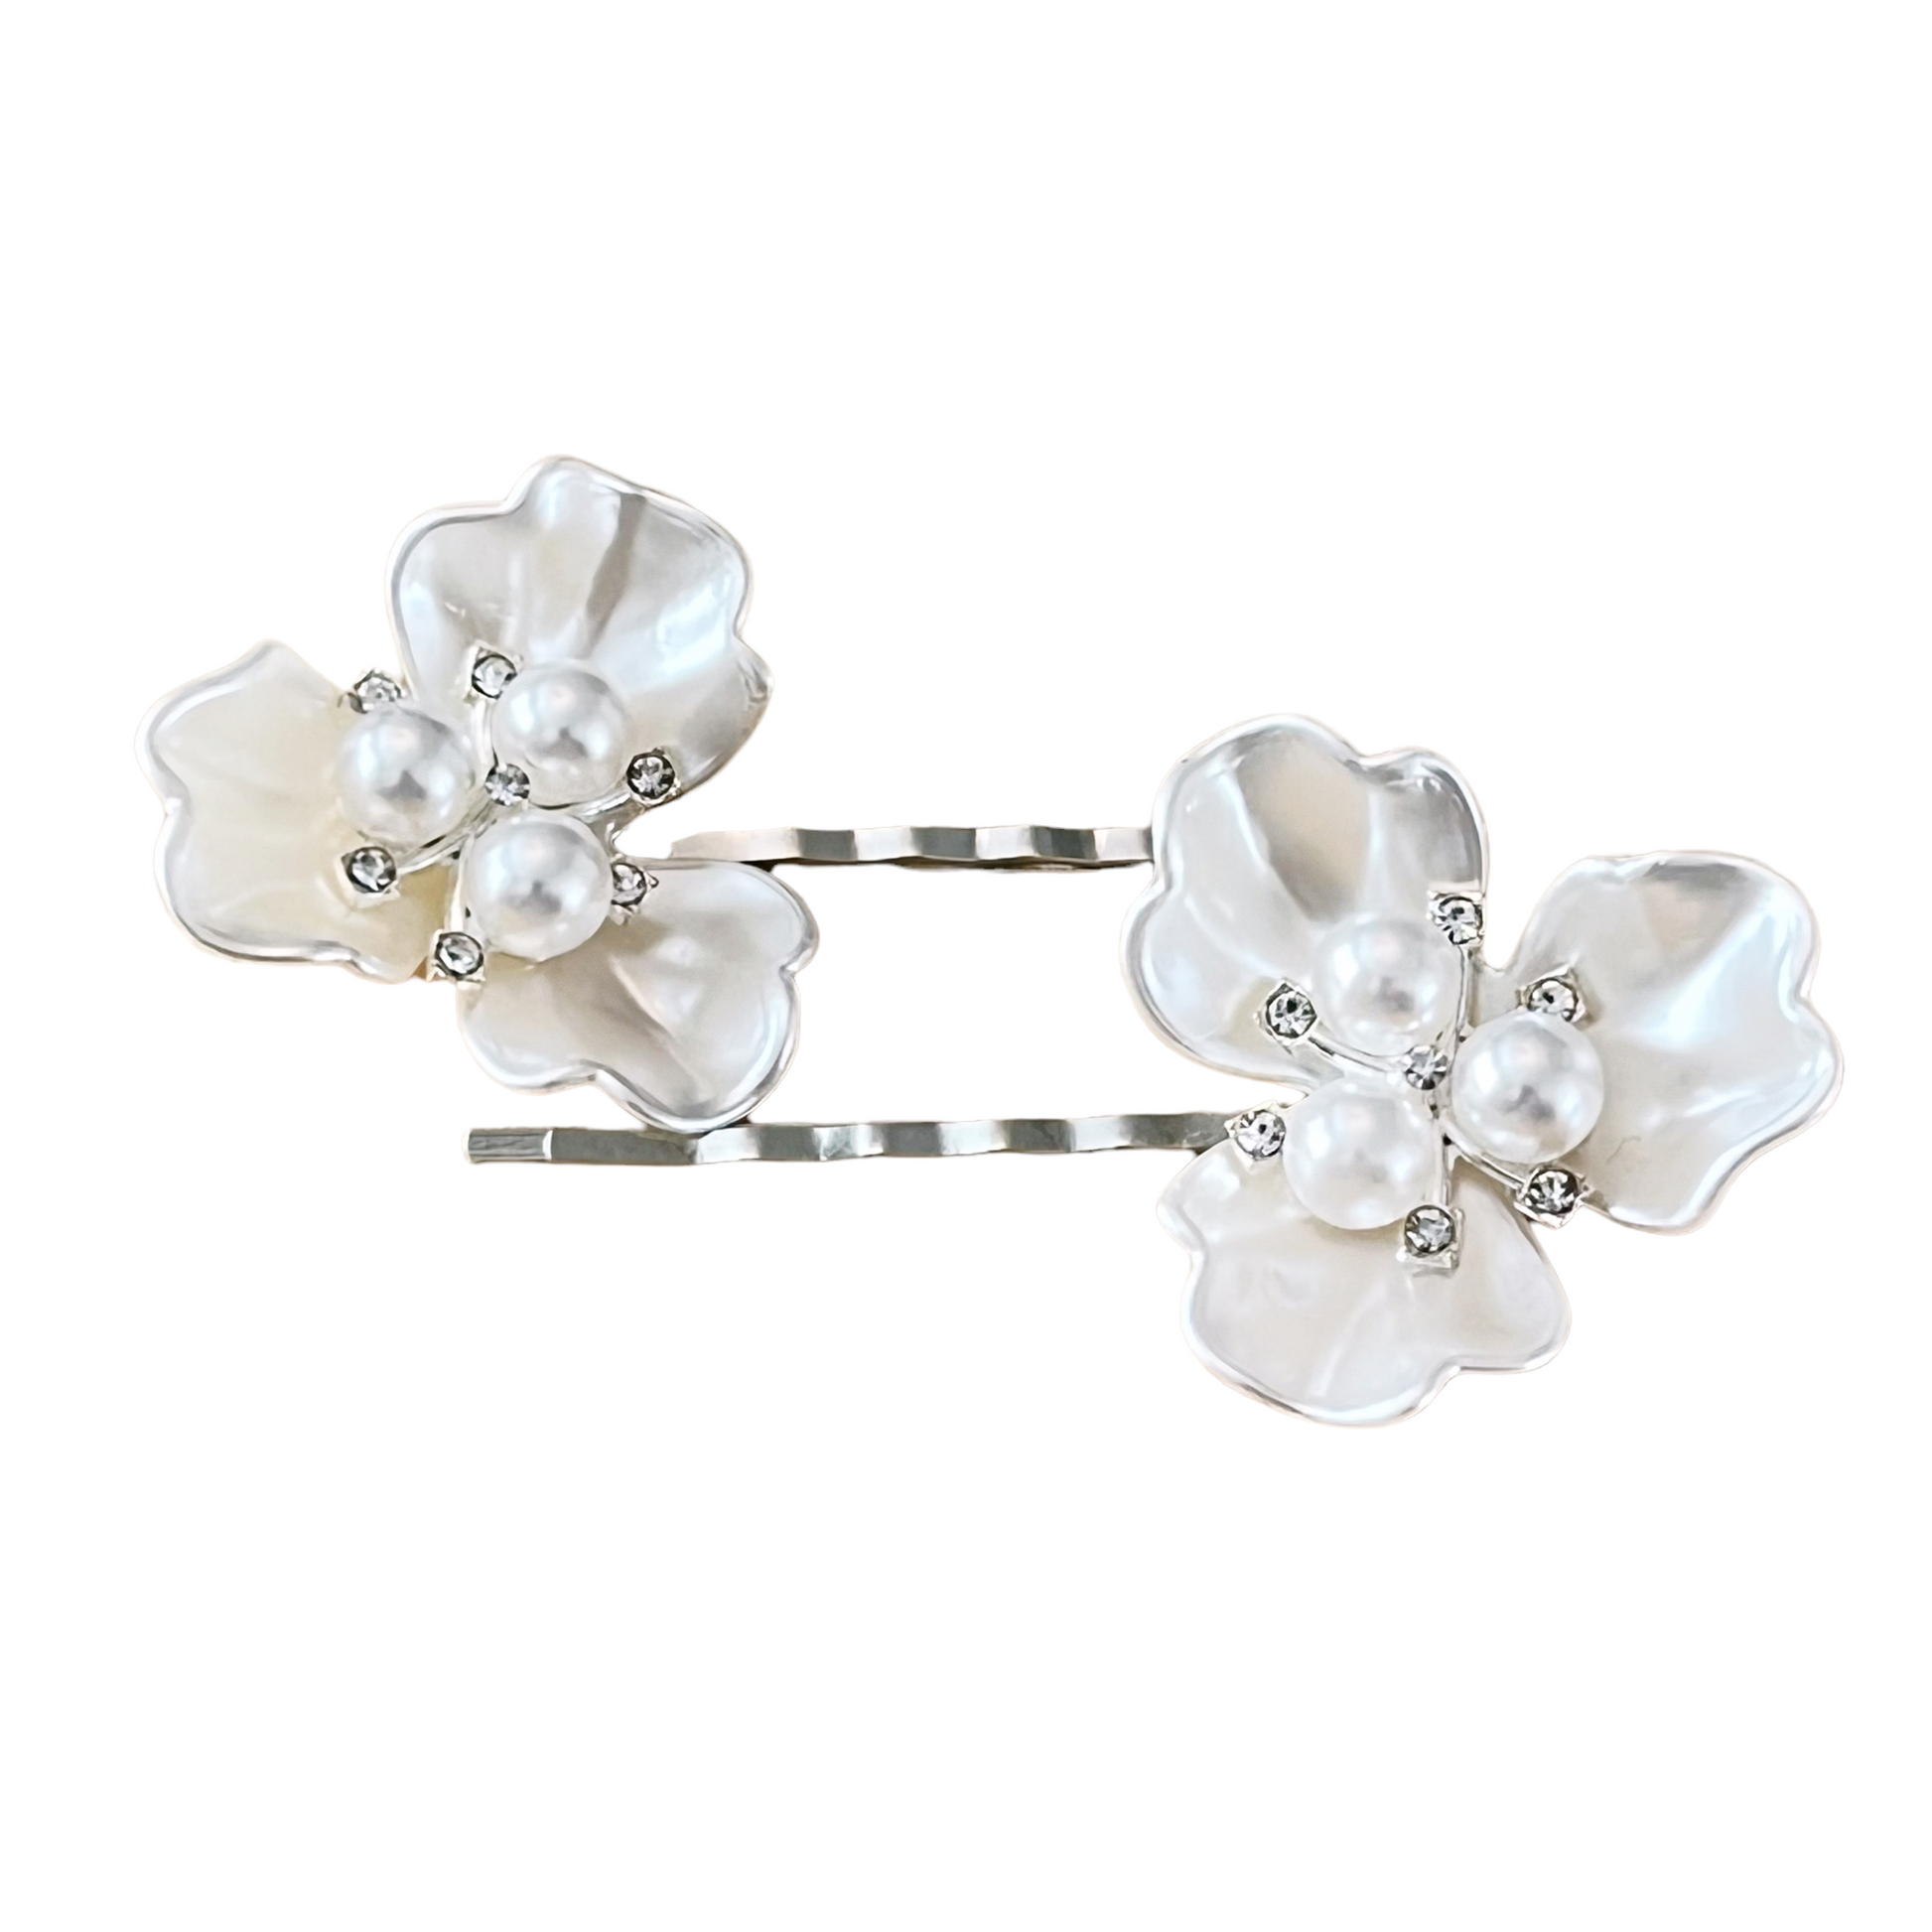 White Floral Hair Pin Set